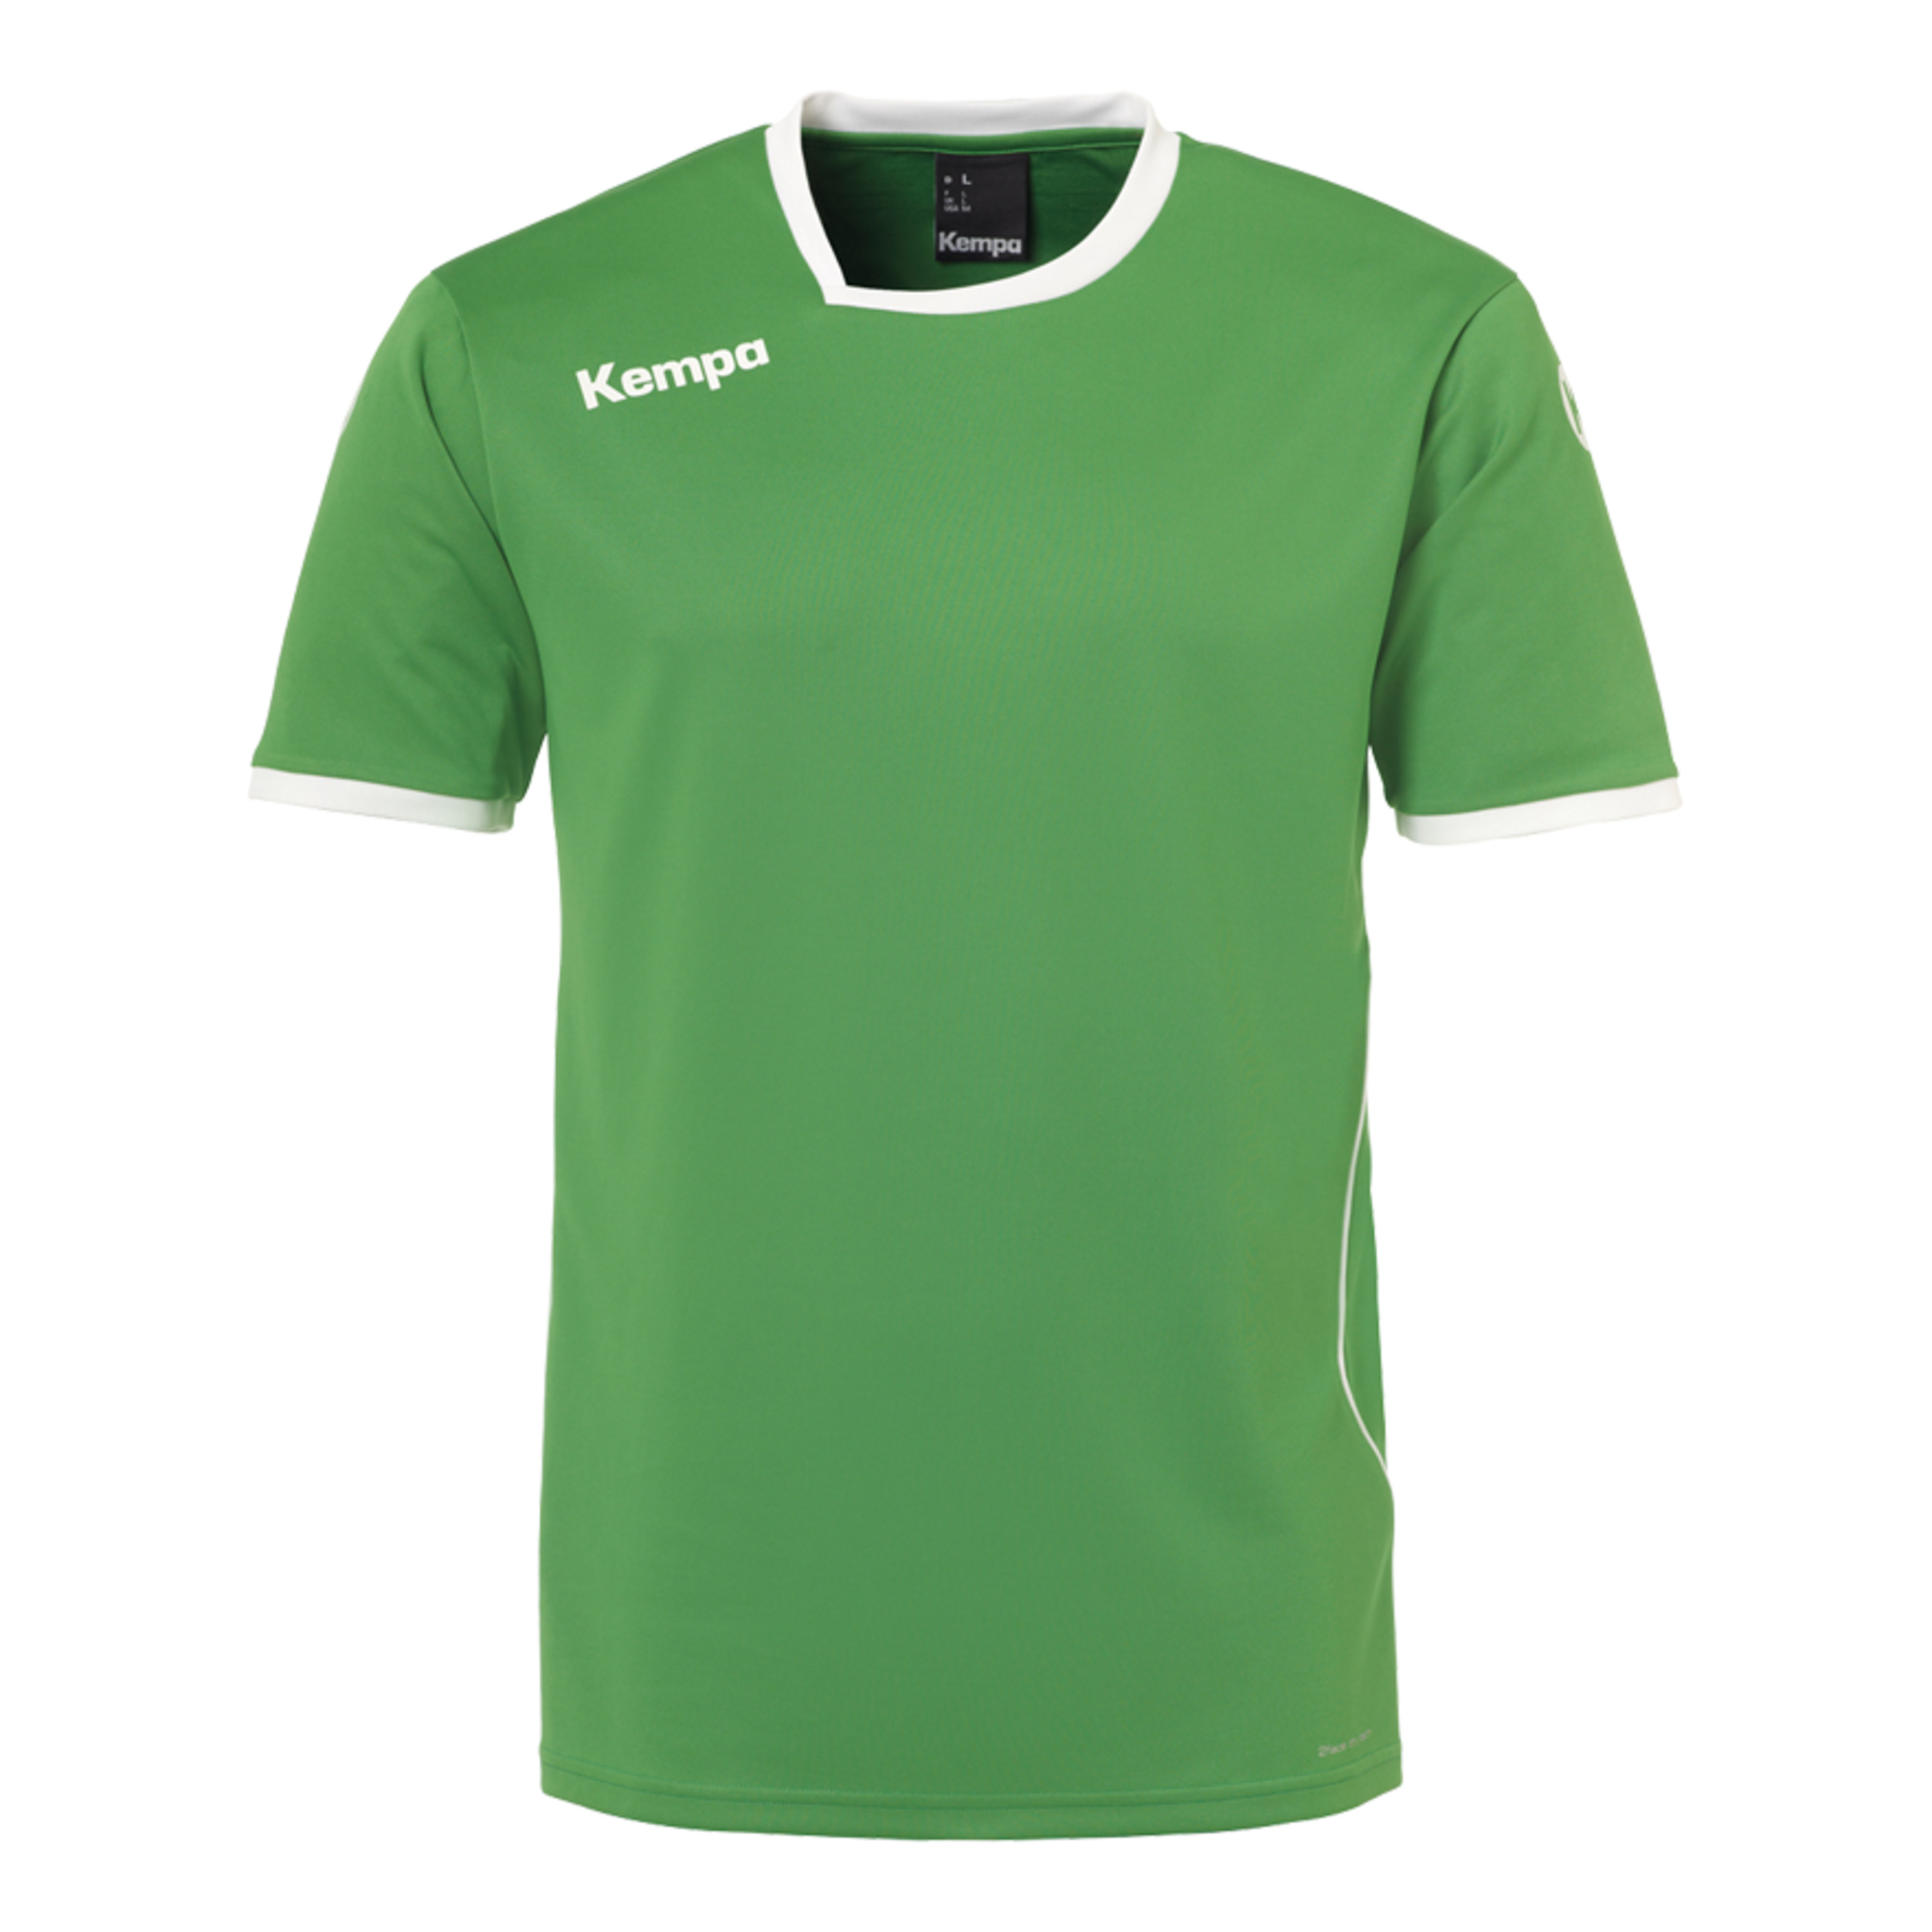 Curve Camiseta Verde/blanco Kempa